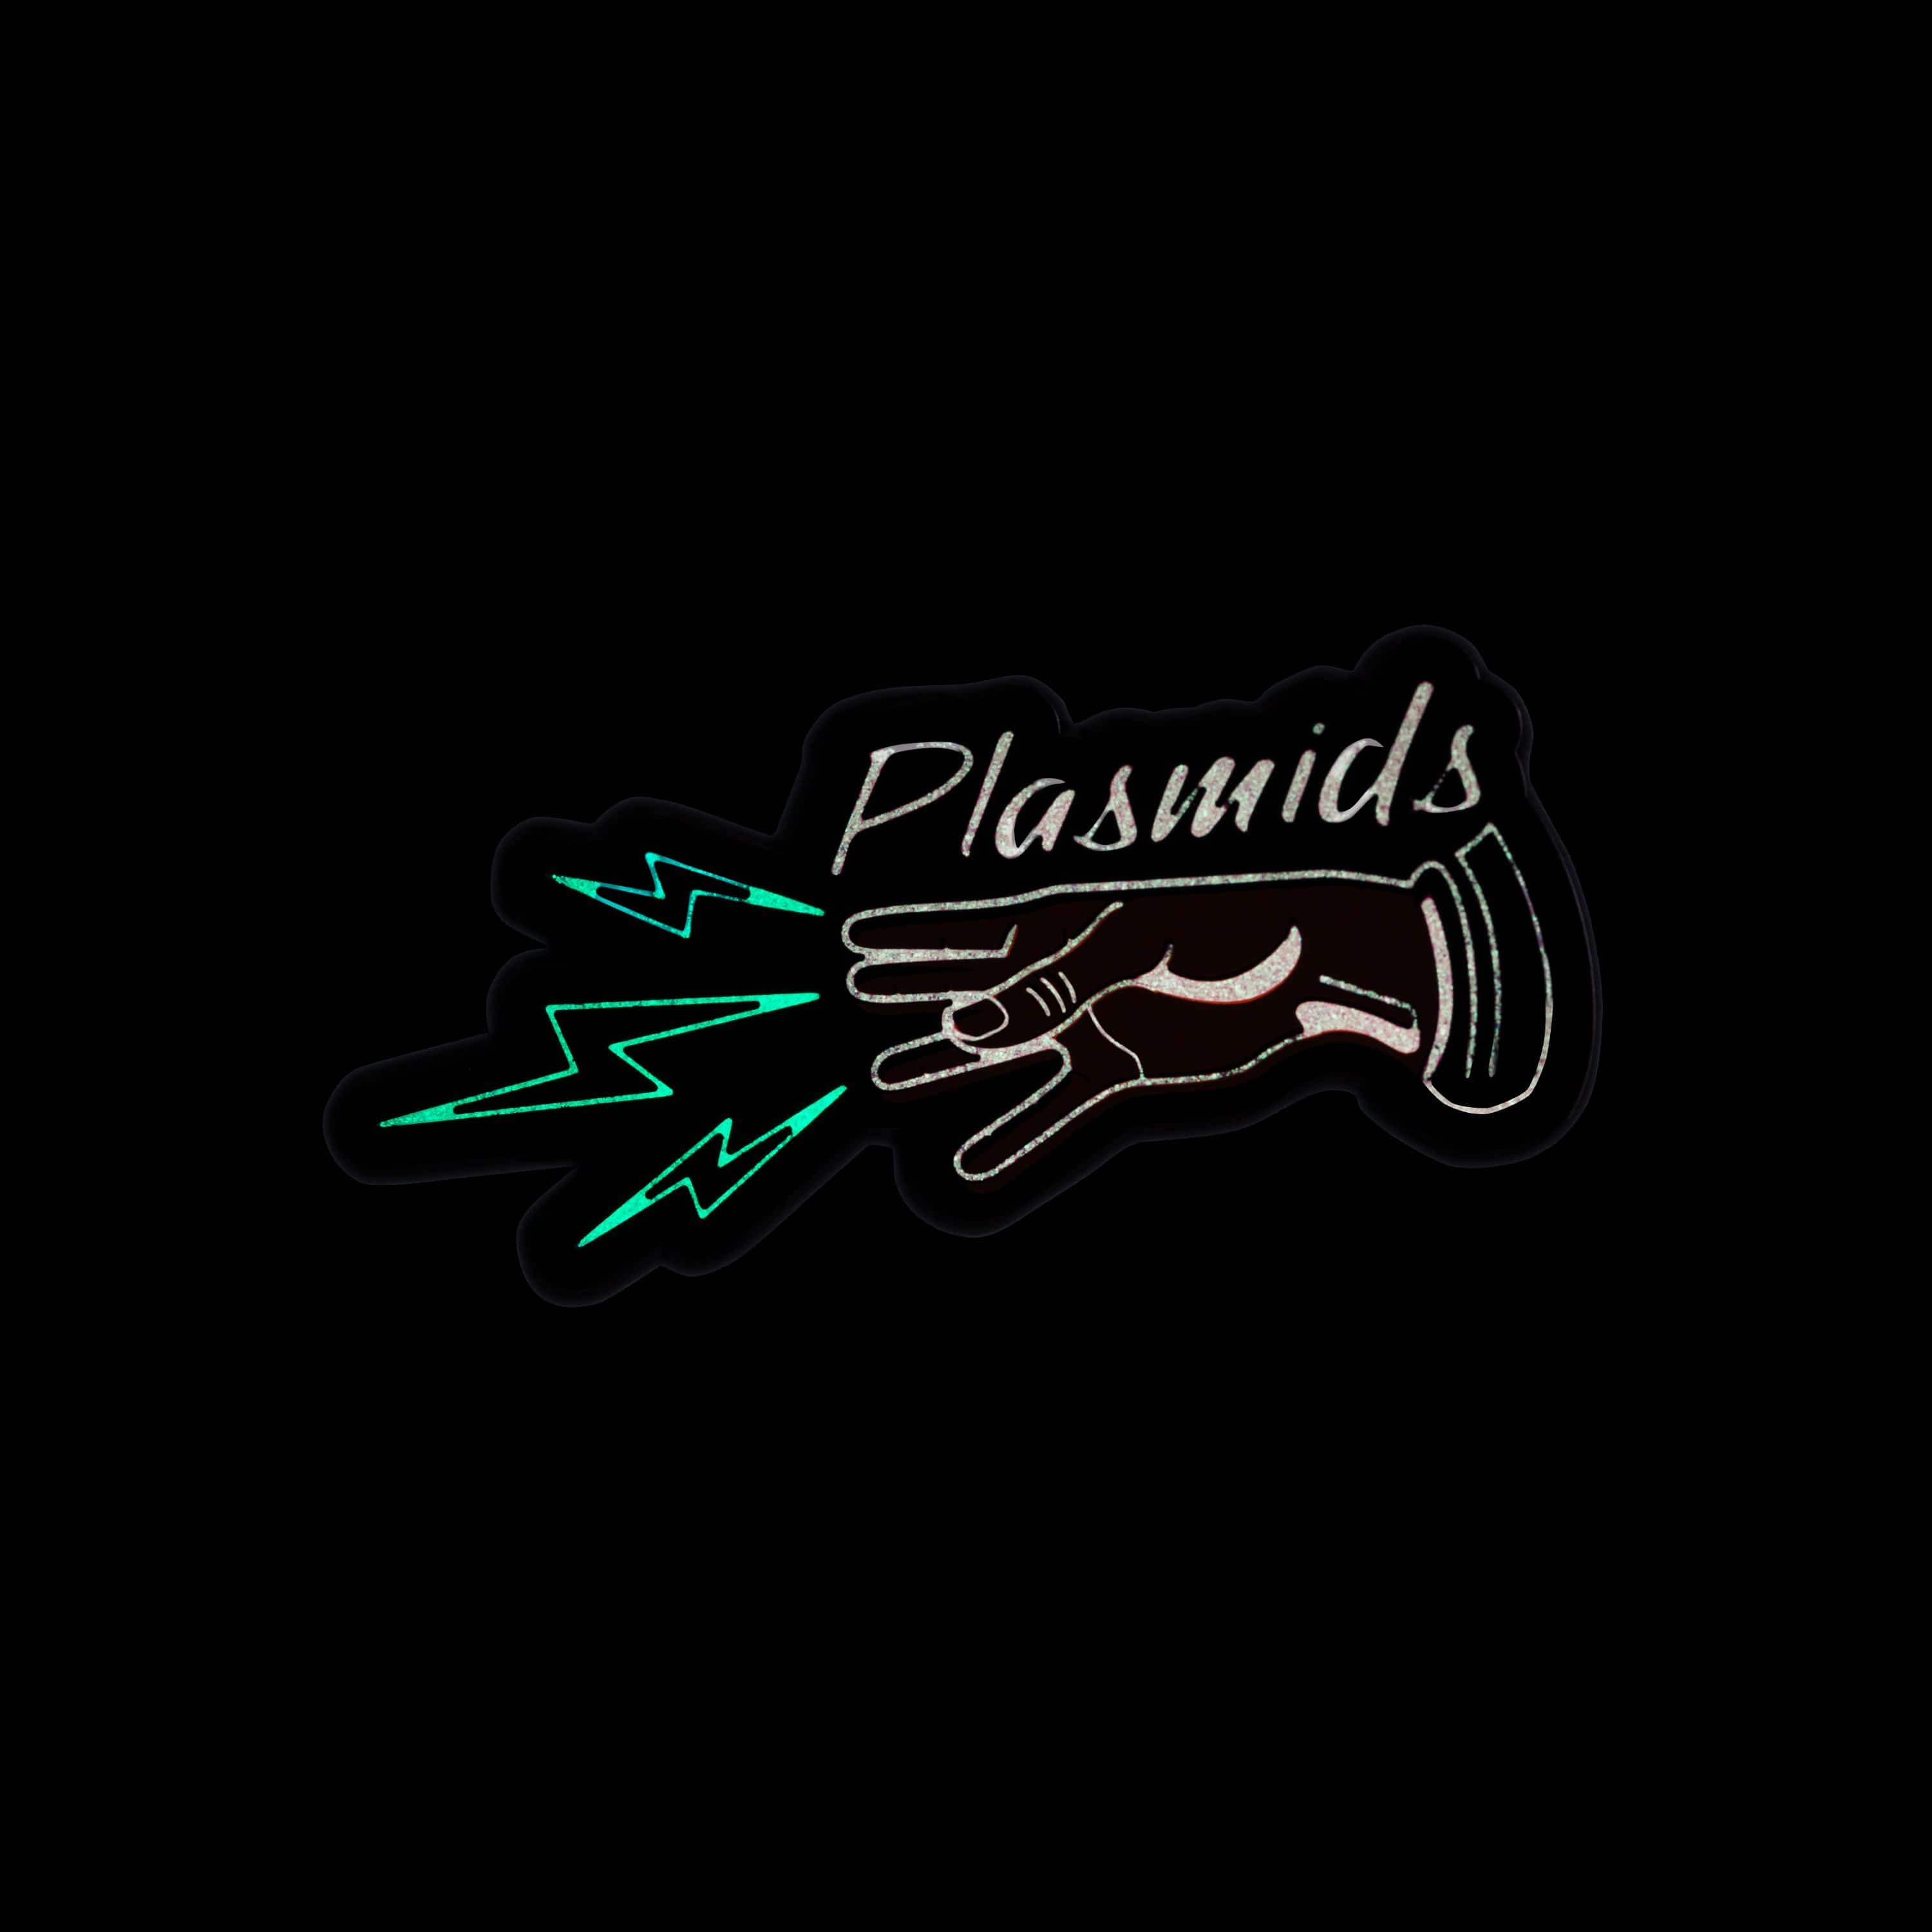 BioShock - Plasmid Neon Sign Glow-in-the-Dark Pin